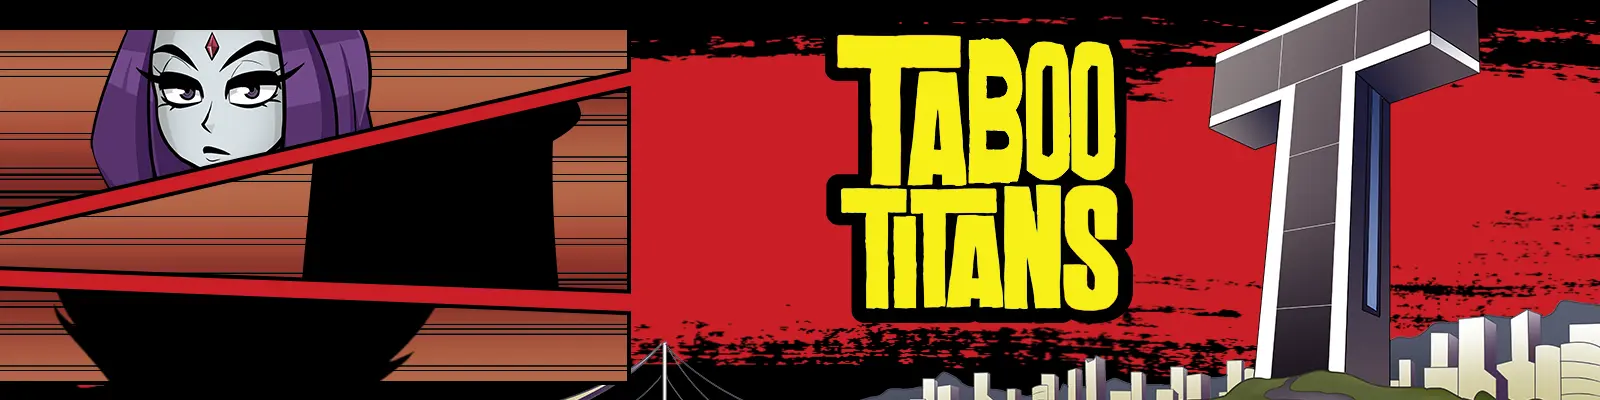 Taboo Titans [v0.10c] main image